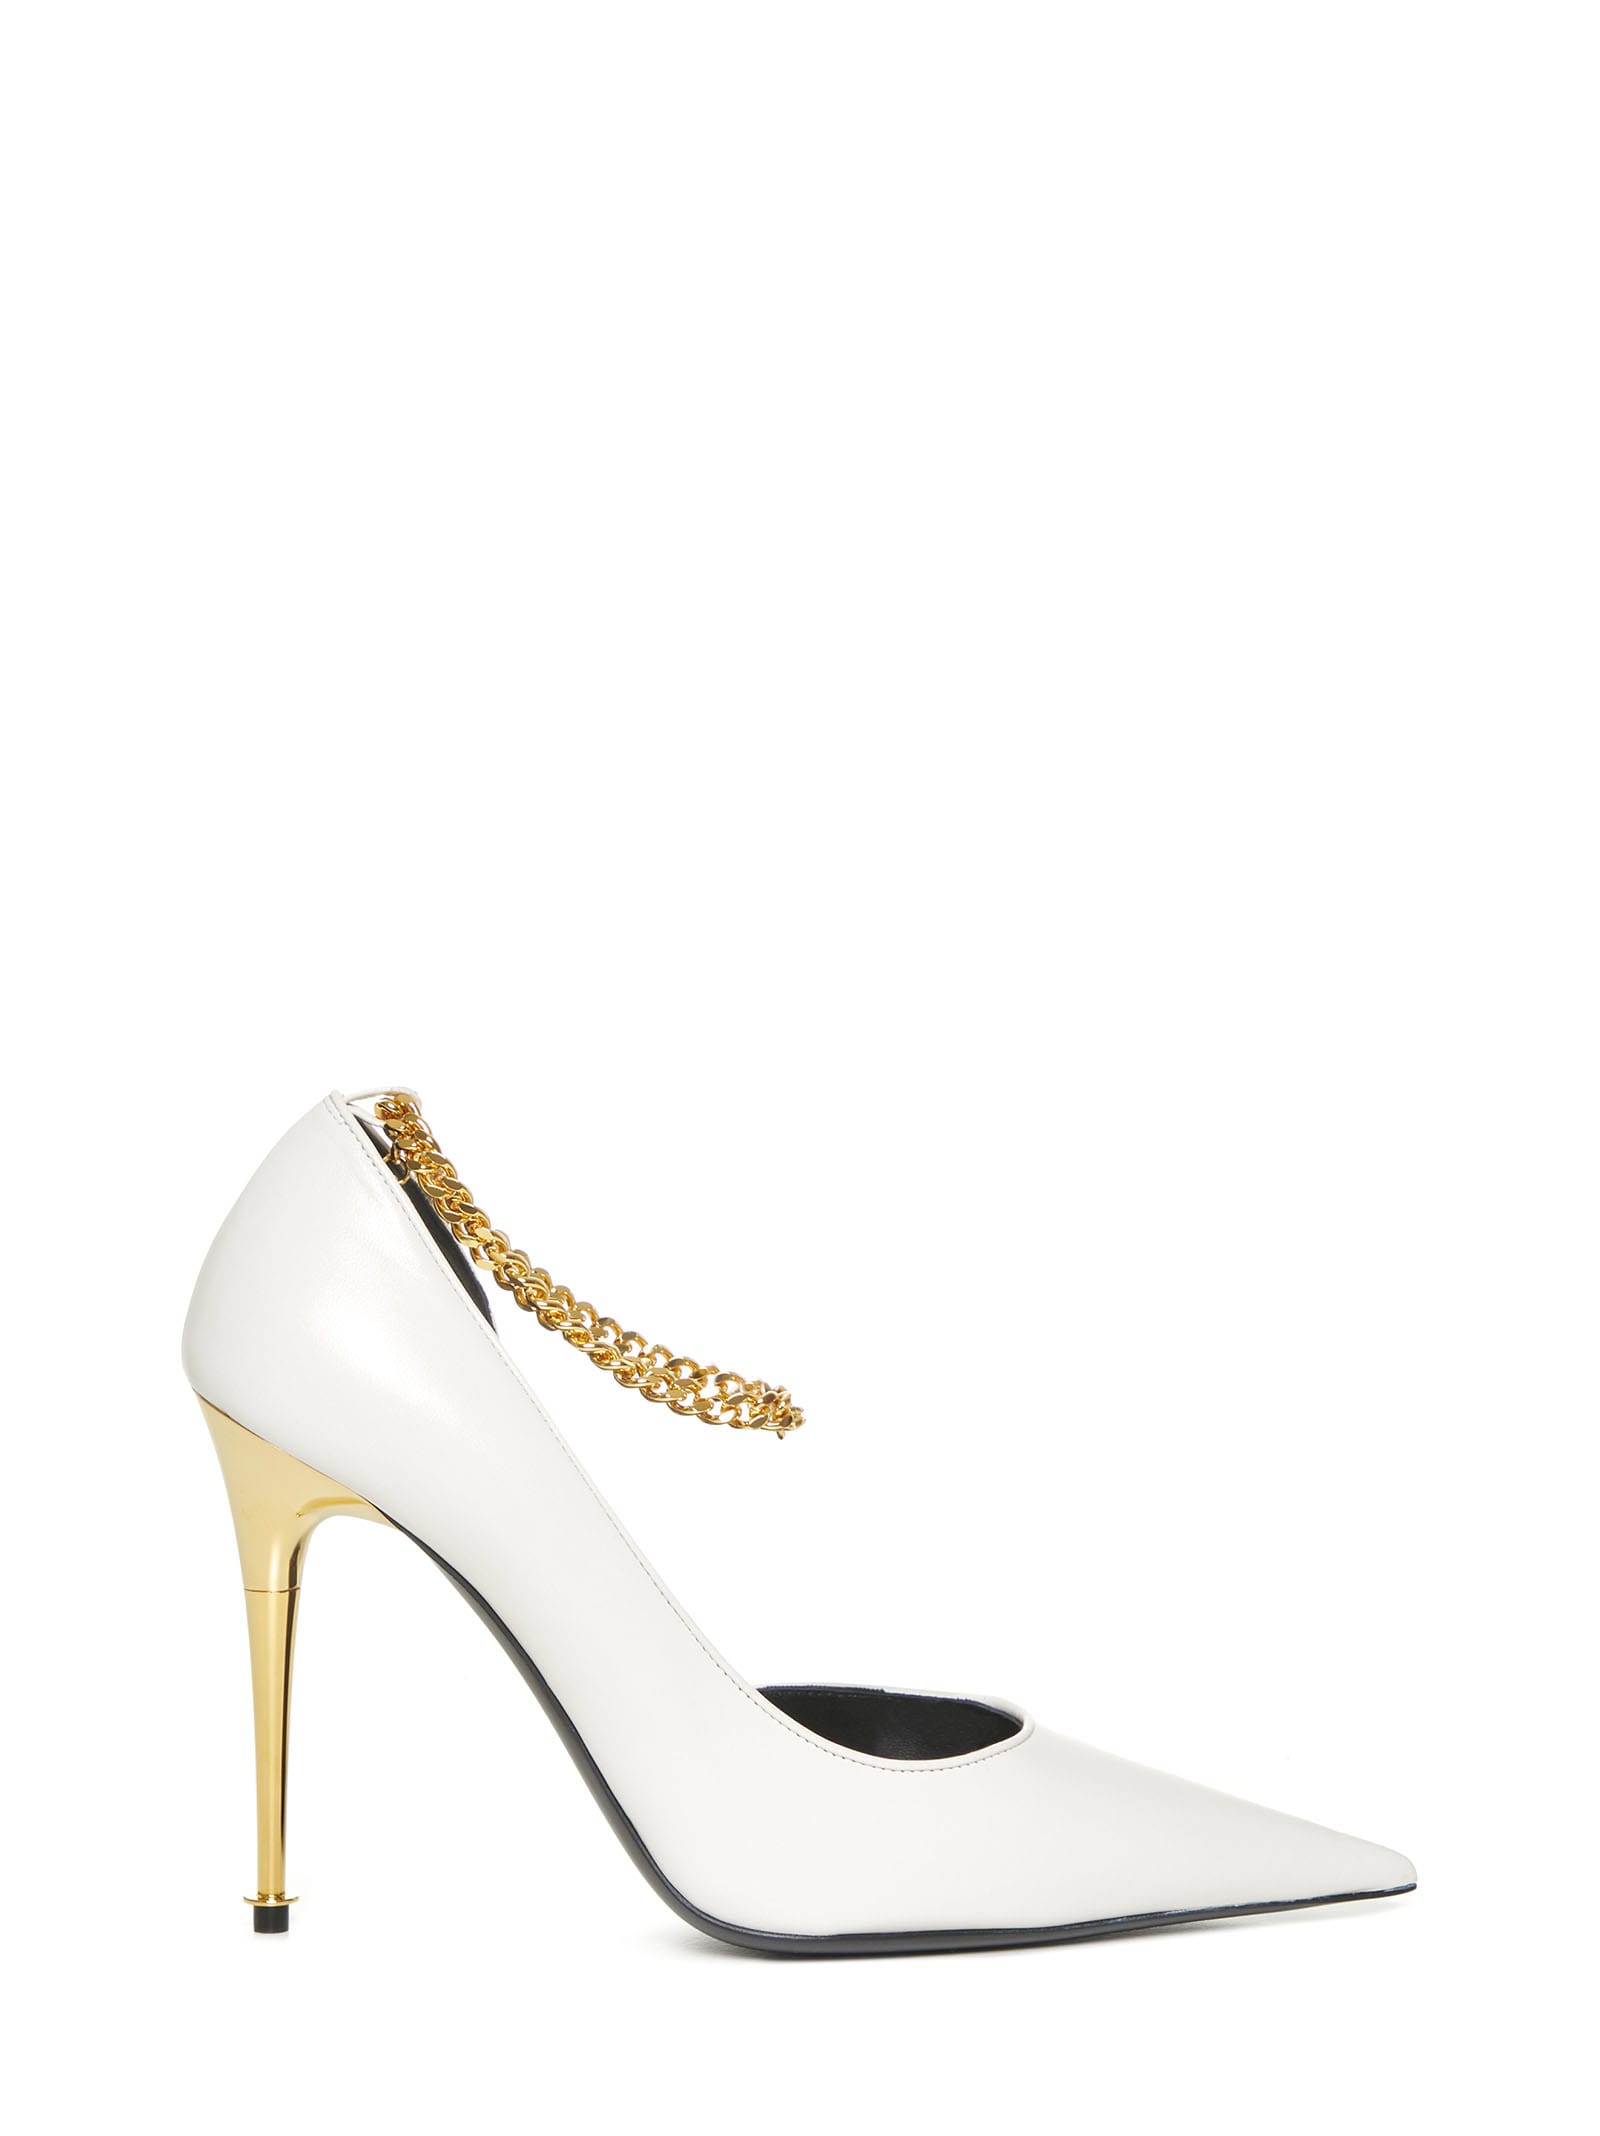 white tom ford heels